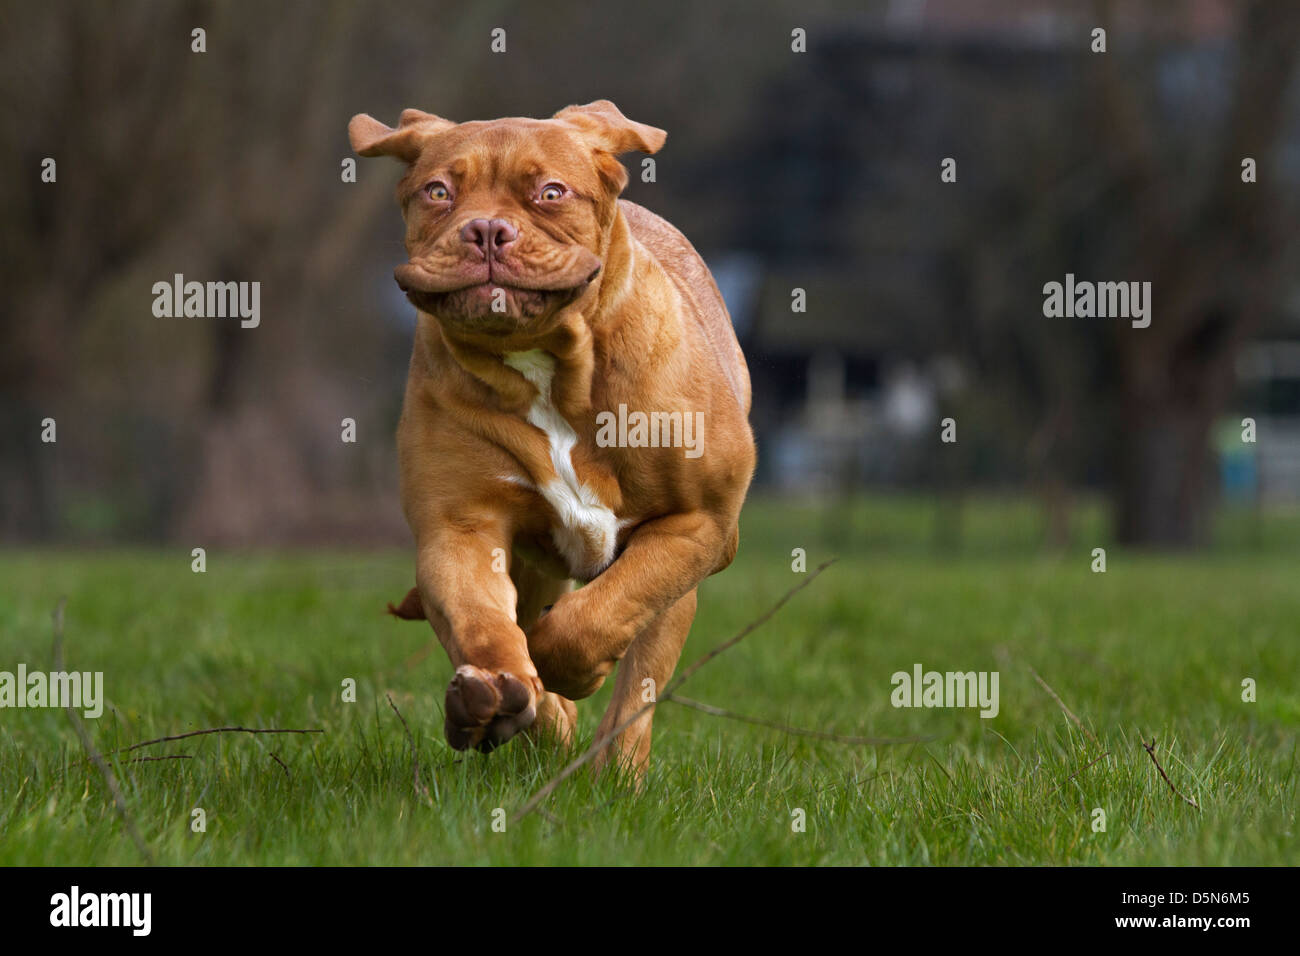 Dogue de Bordeaux / French Mastiff / Bordeauxdog, dog running in garden pulling funny faces Stock Photo